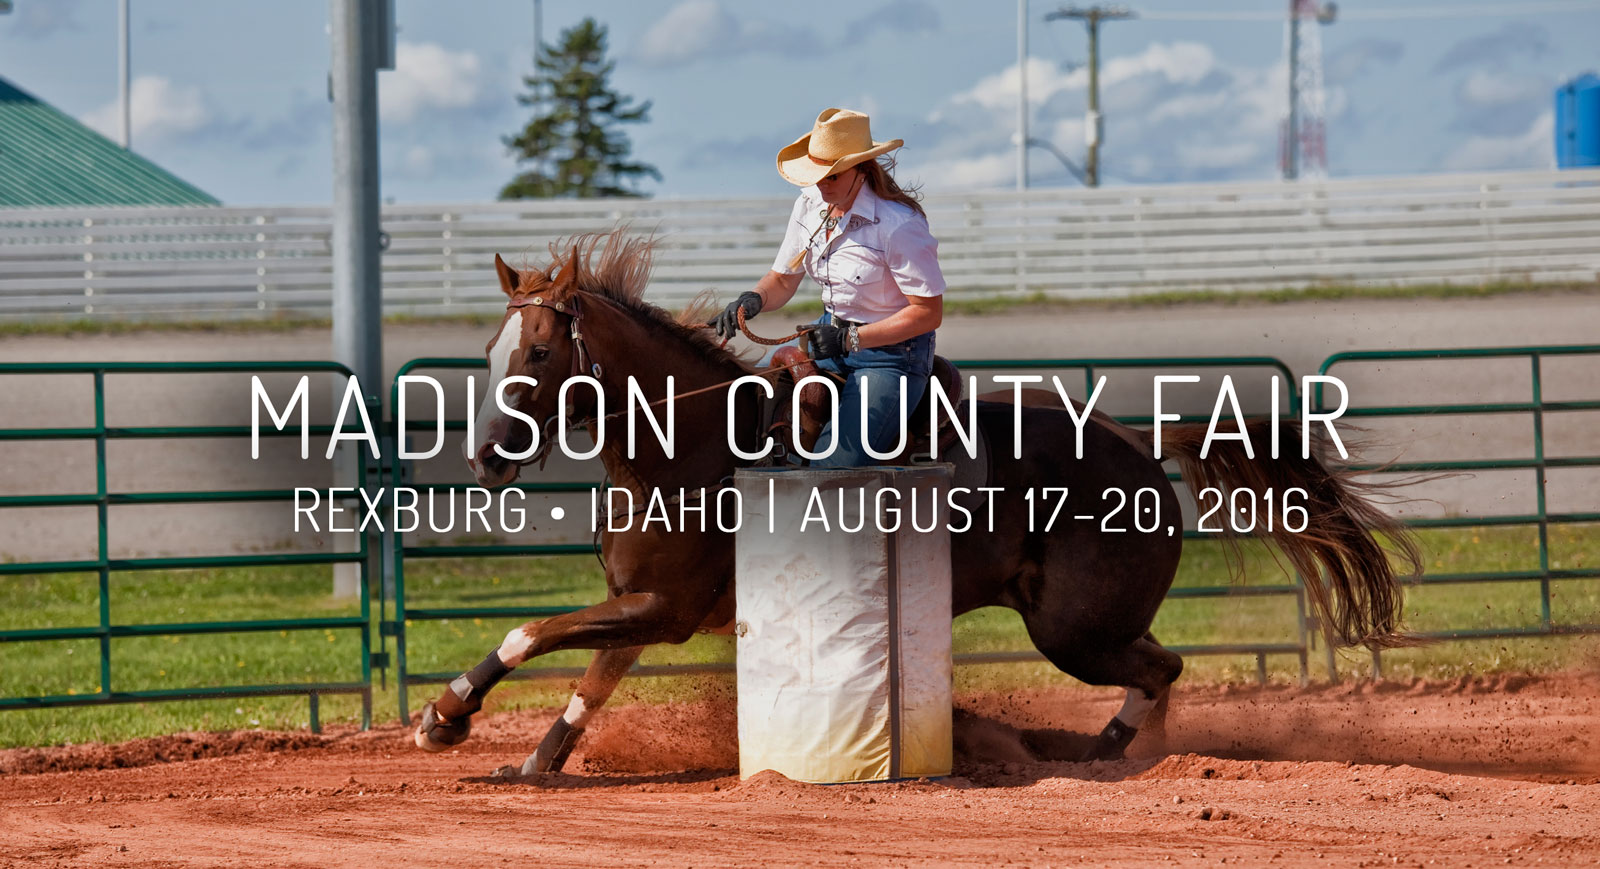 Madison County Fair is Here! Rexburg Online